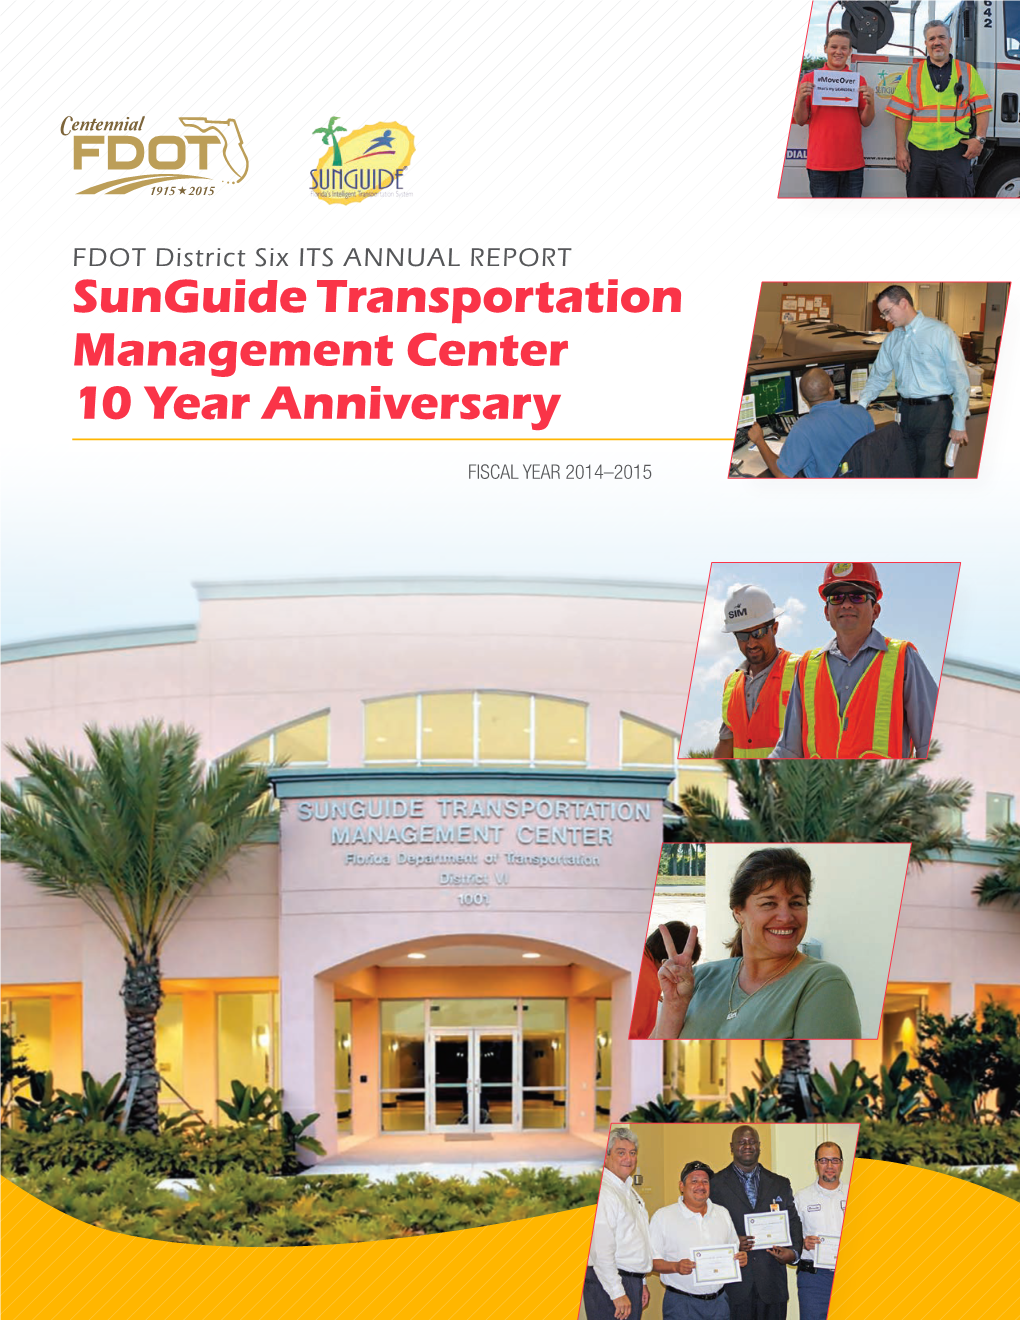 Sunguide Transportation Management Center 10 Year Anniversary